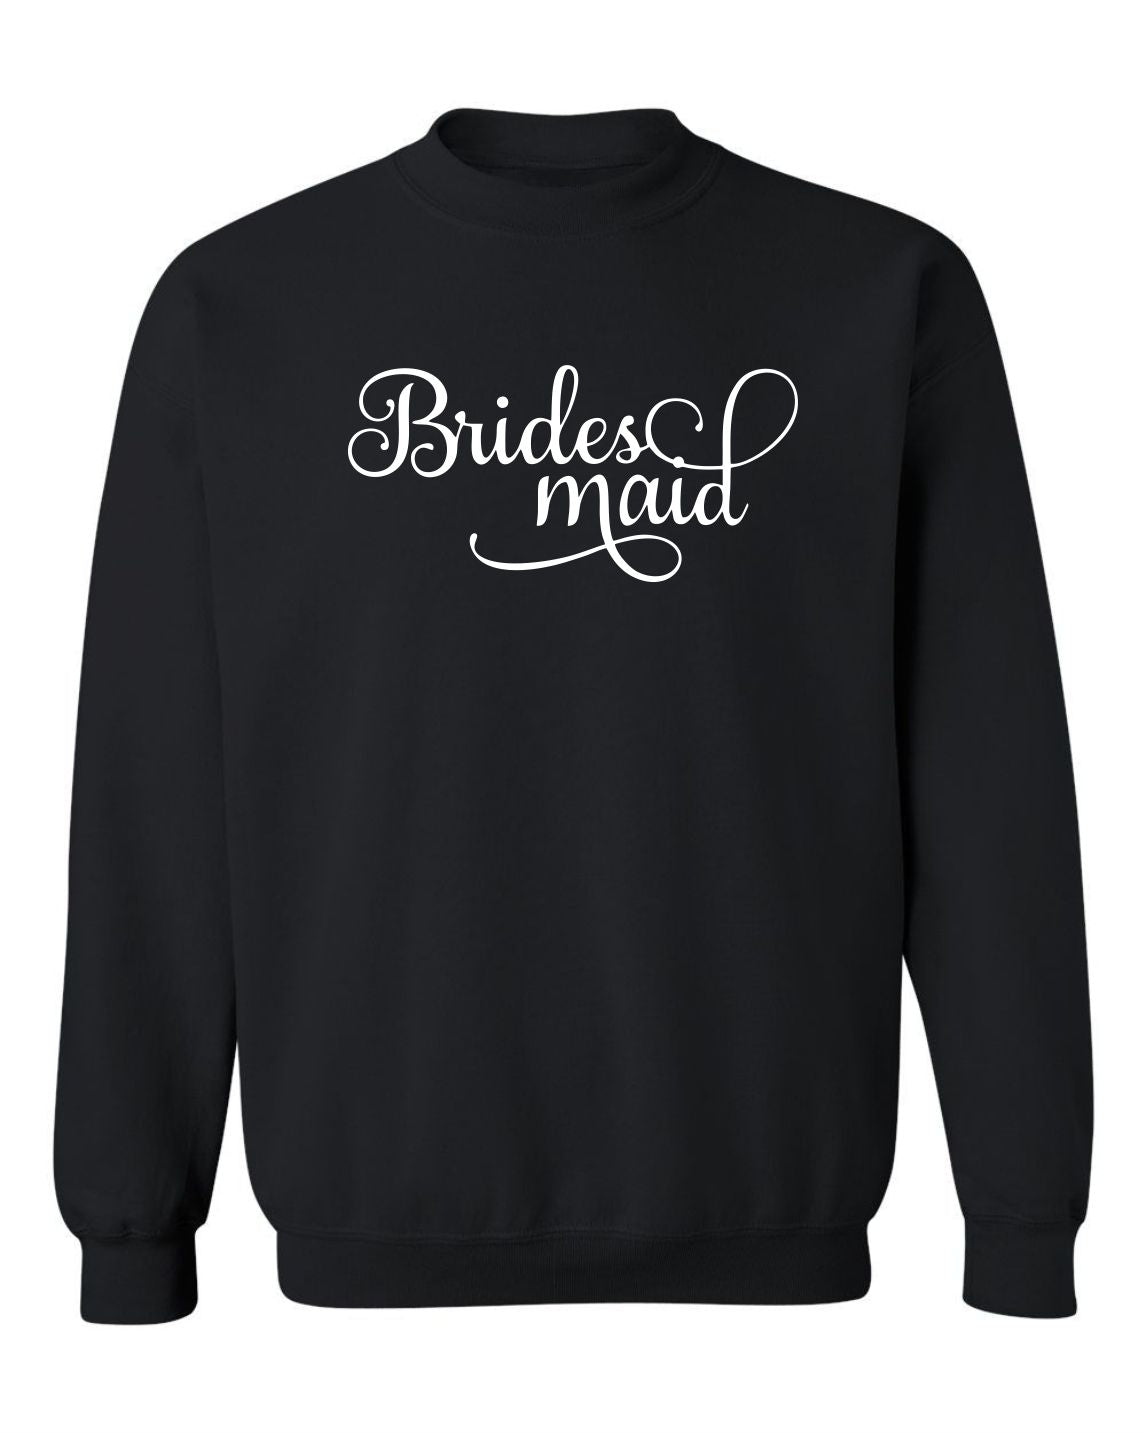 "Bridesmaid" (Swirl Design) Unisex Crewneck Sweatshirt